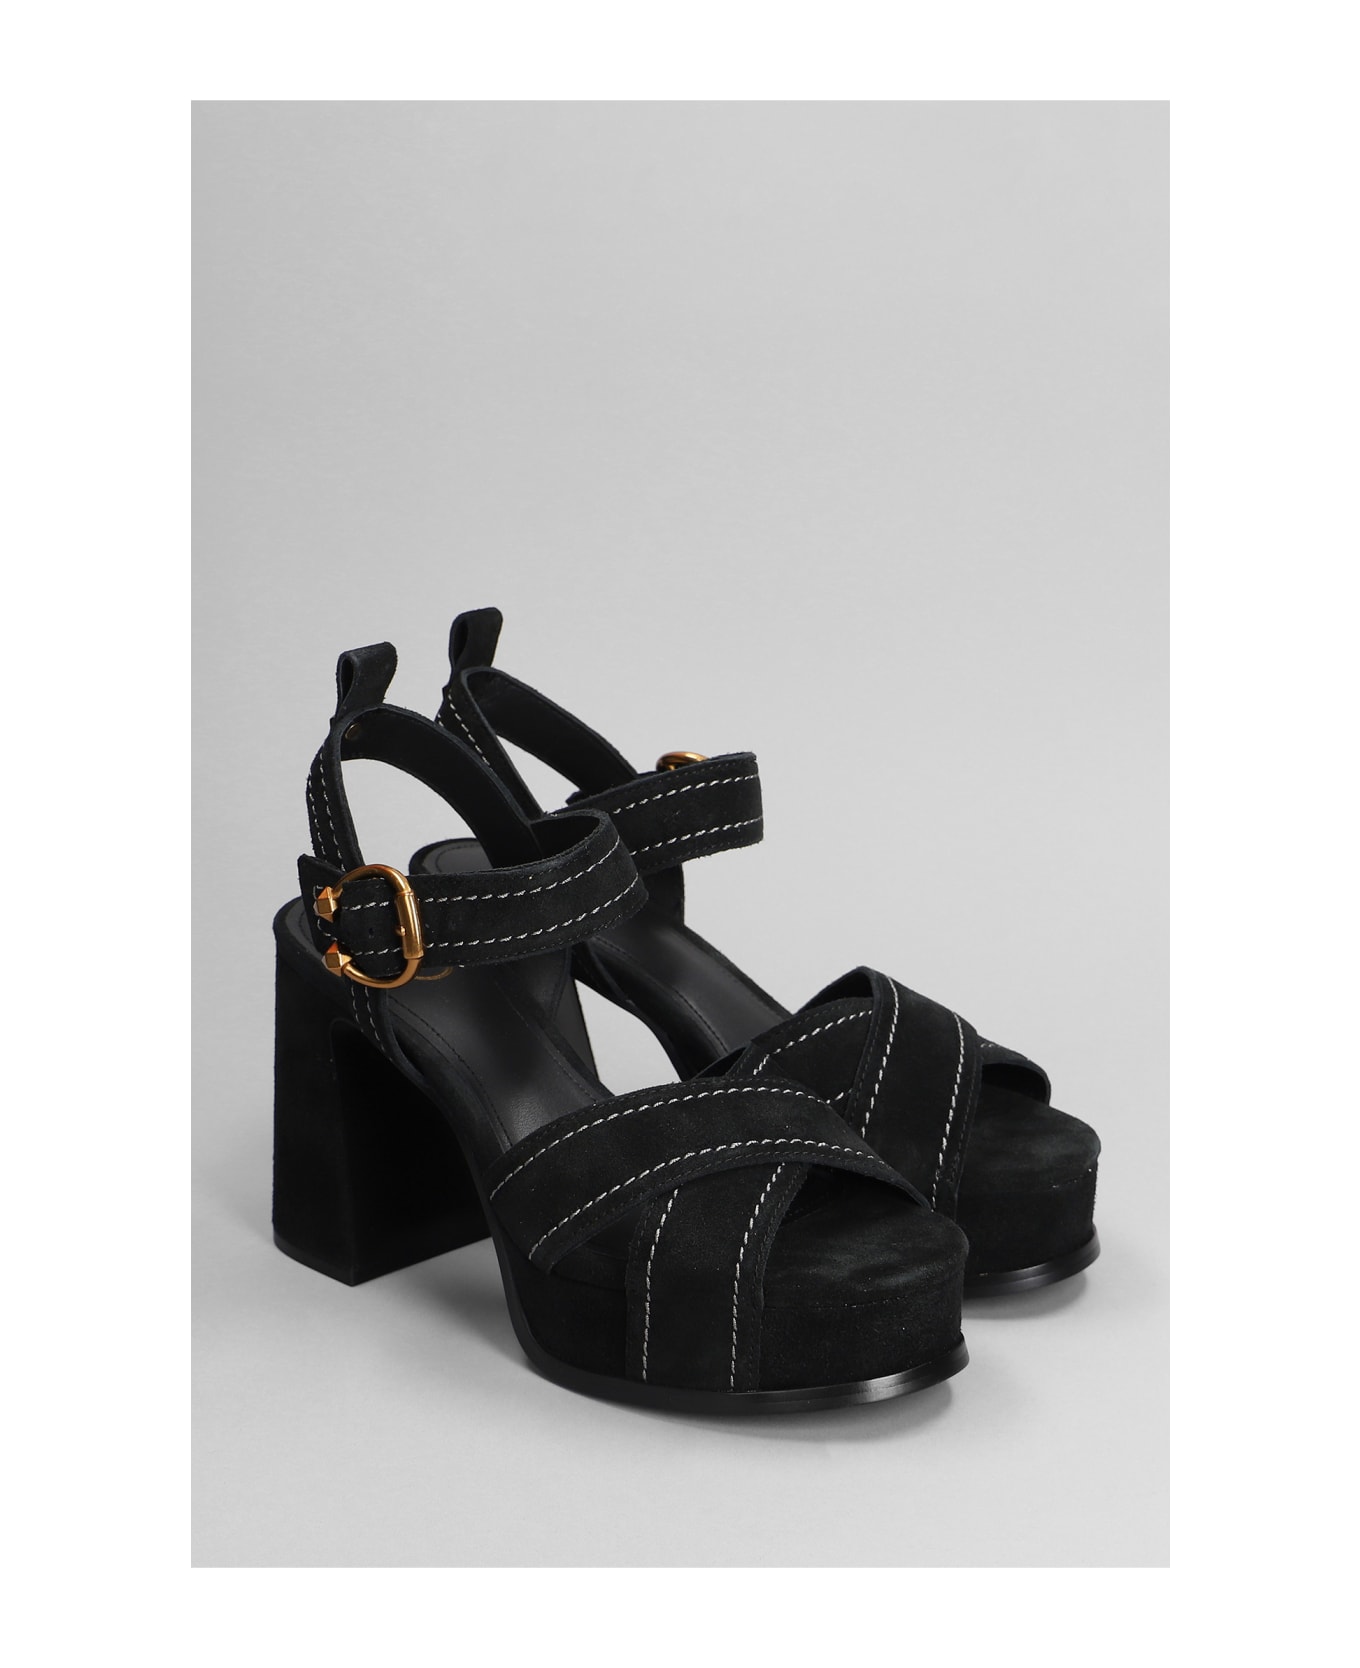 Ash Melany Sandals In Black Suede - black